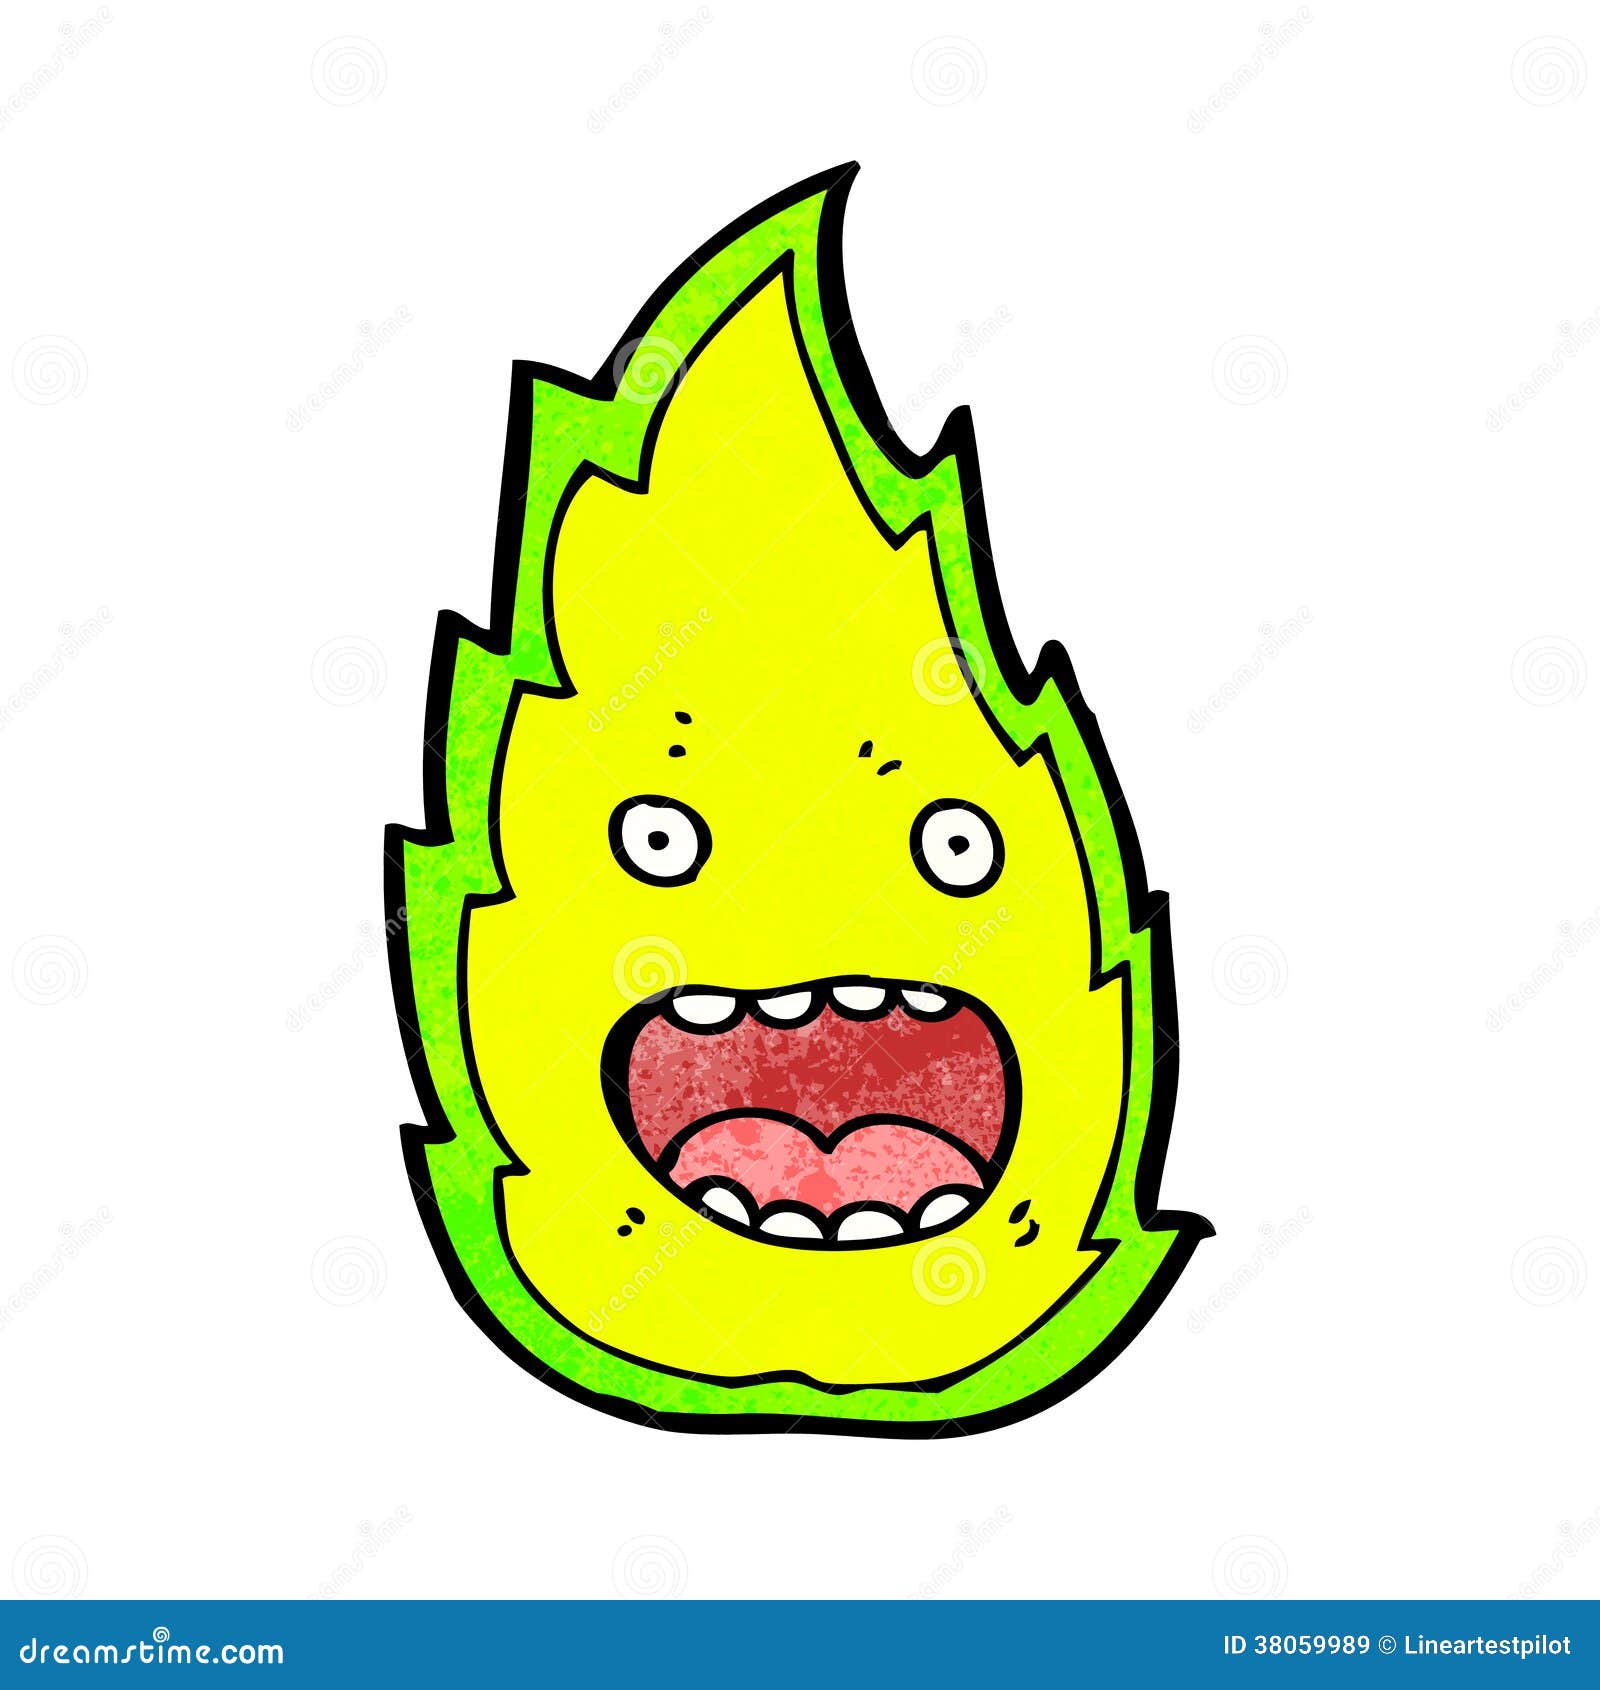 Cartoon green flame stock vector. Illustration of crazy - 38059989